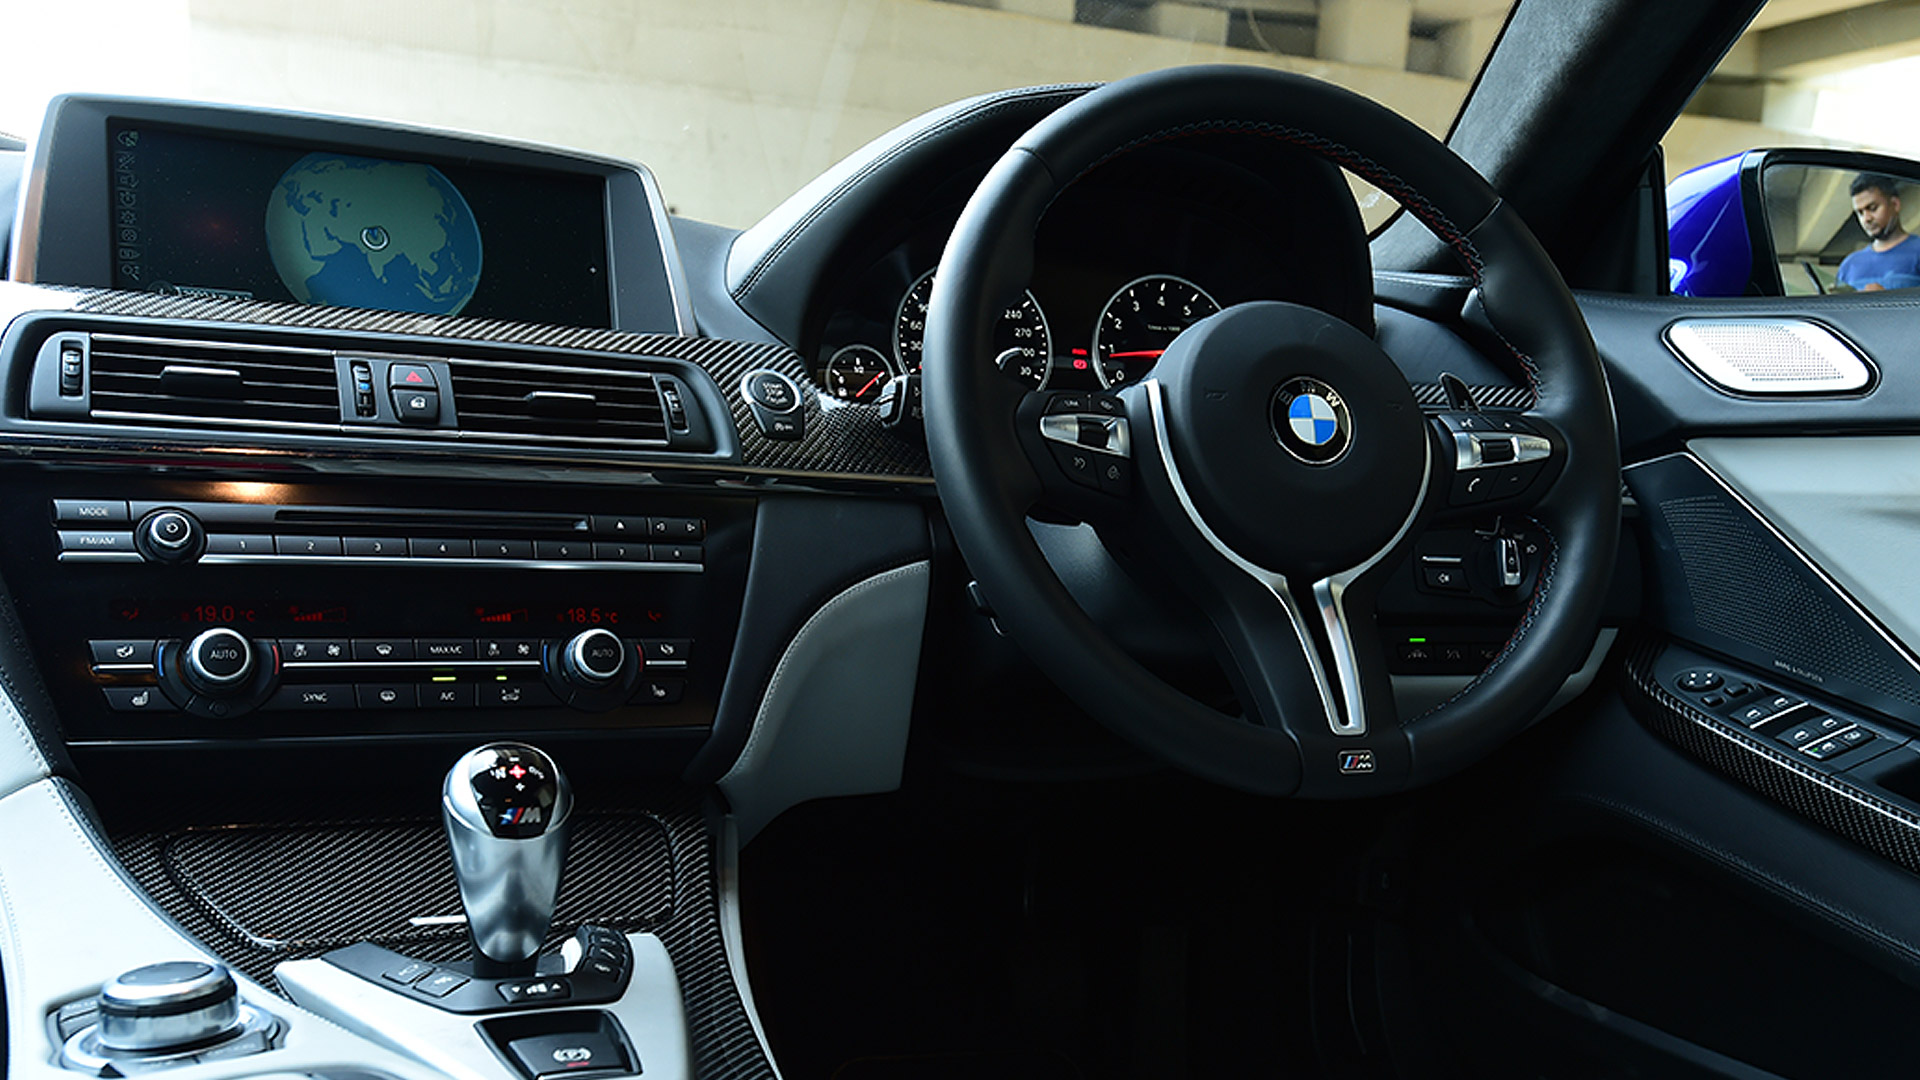 BMW M6 gran coupe 2015 Exterior